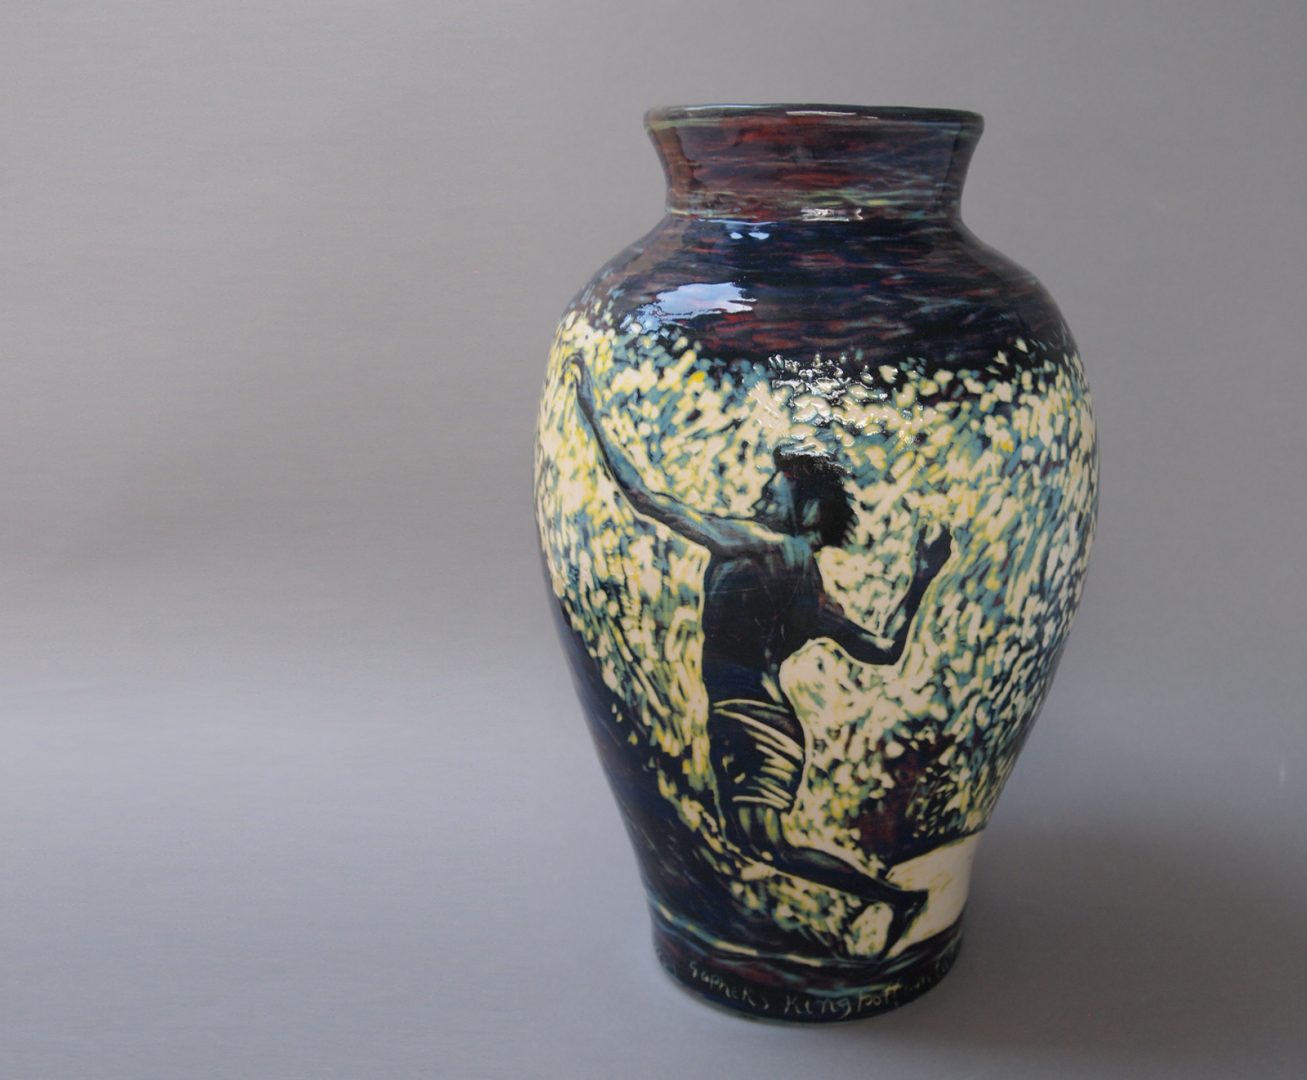 Vase by Gerry Wedd